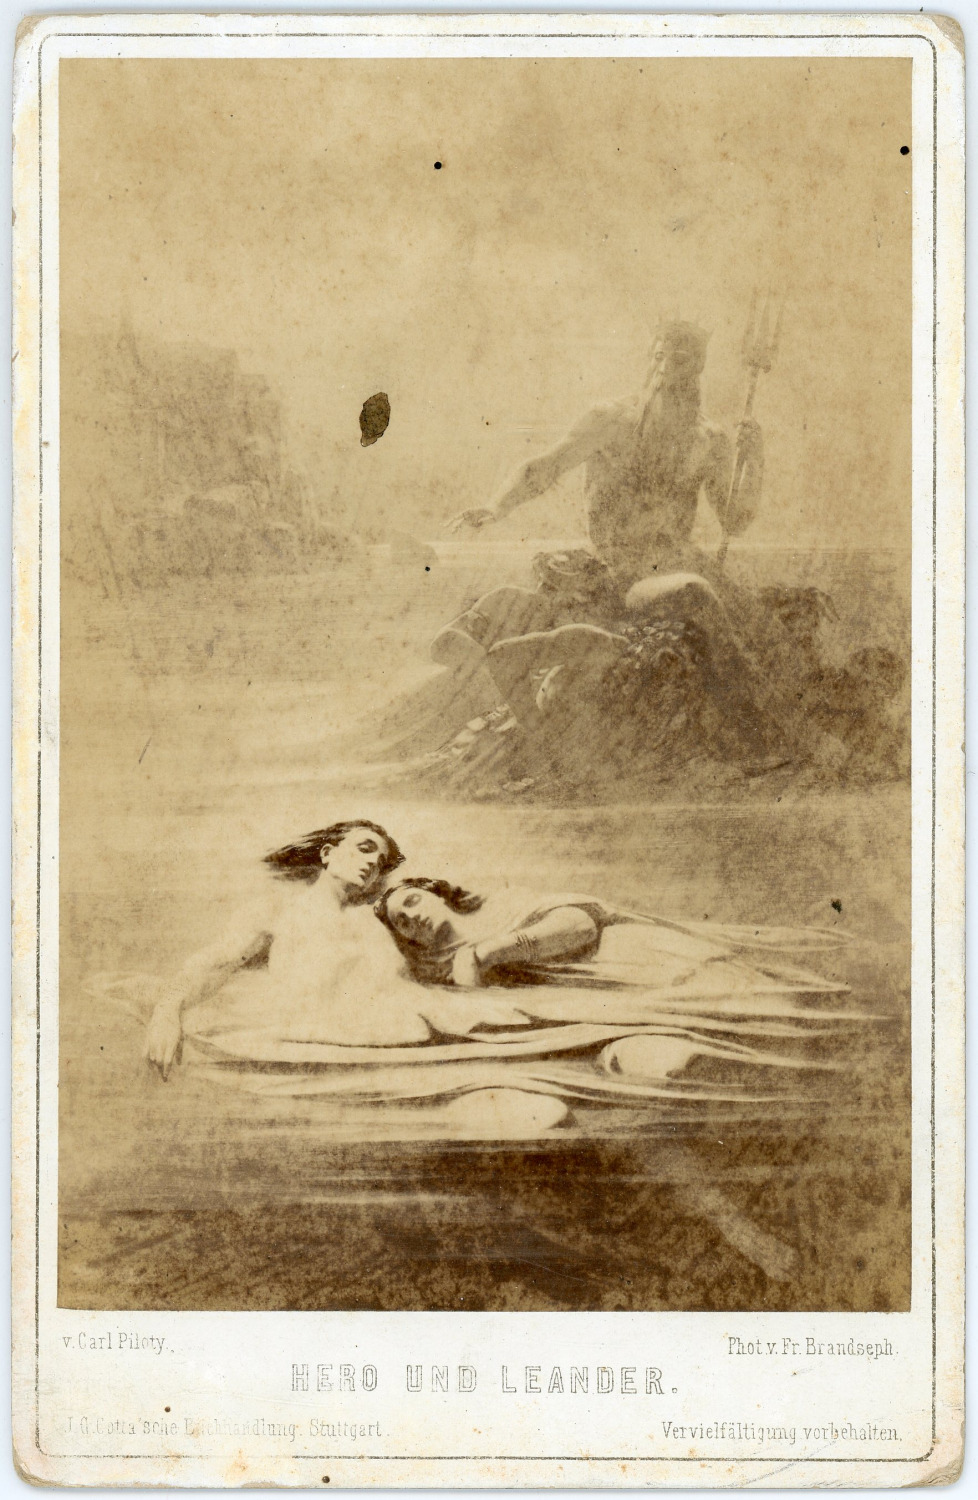 Vintage Hero and Leander Albumen Print Albumin Print 17x11 Circa 1890